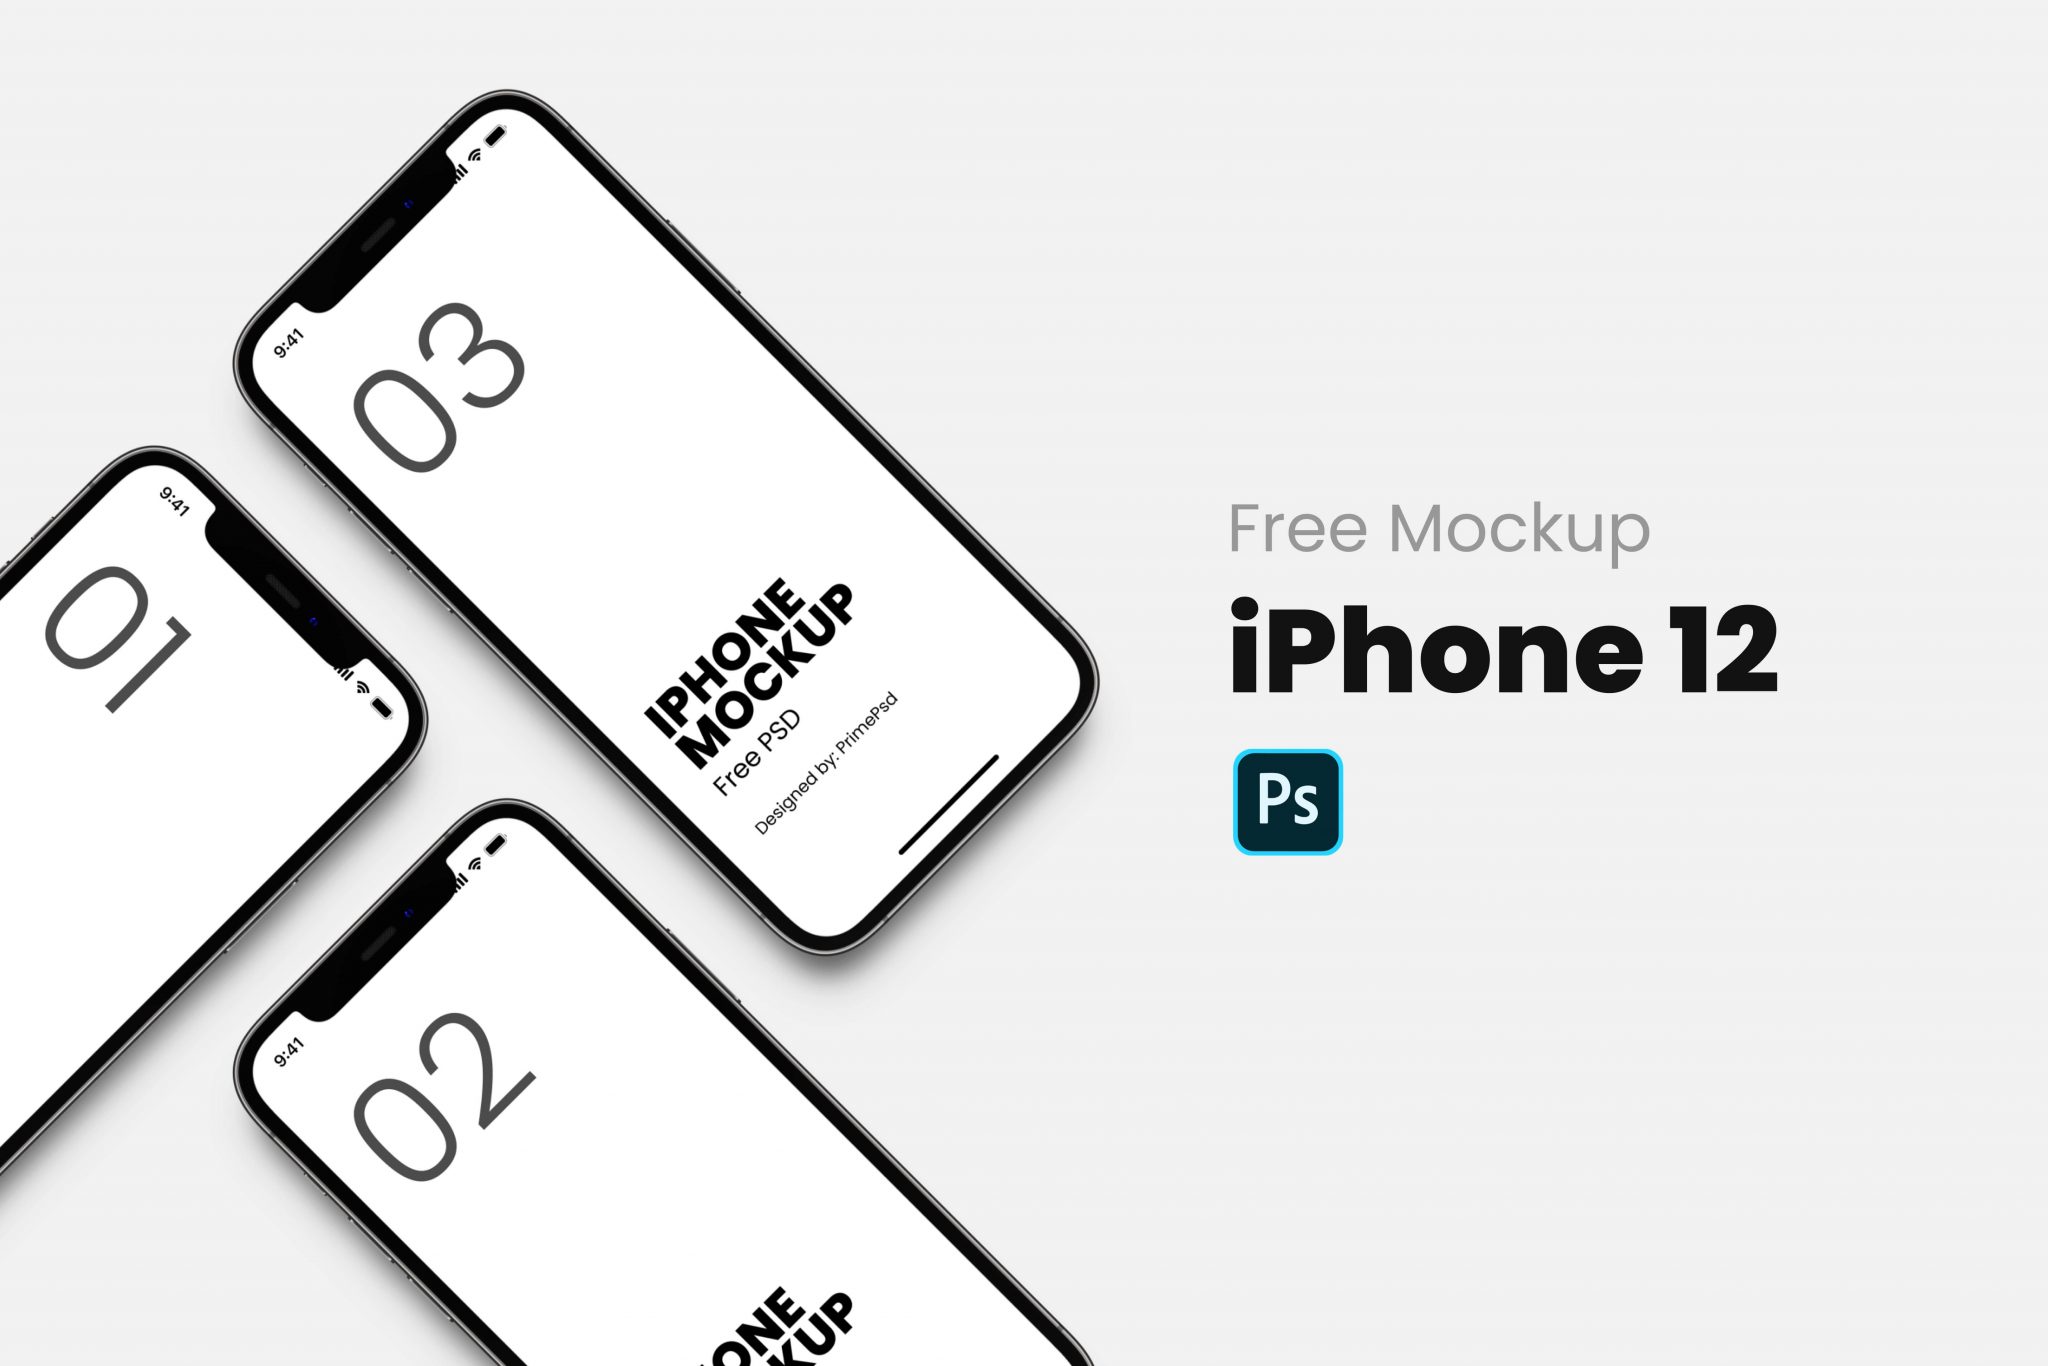 iPhone Mockup Free PSD - PrimePSD